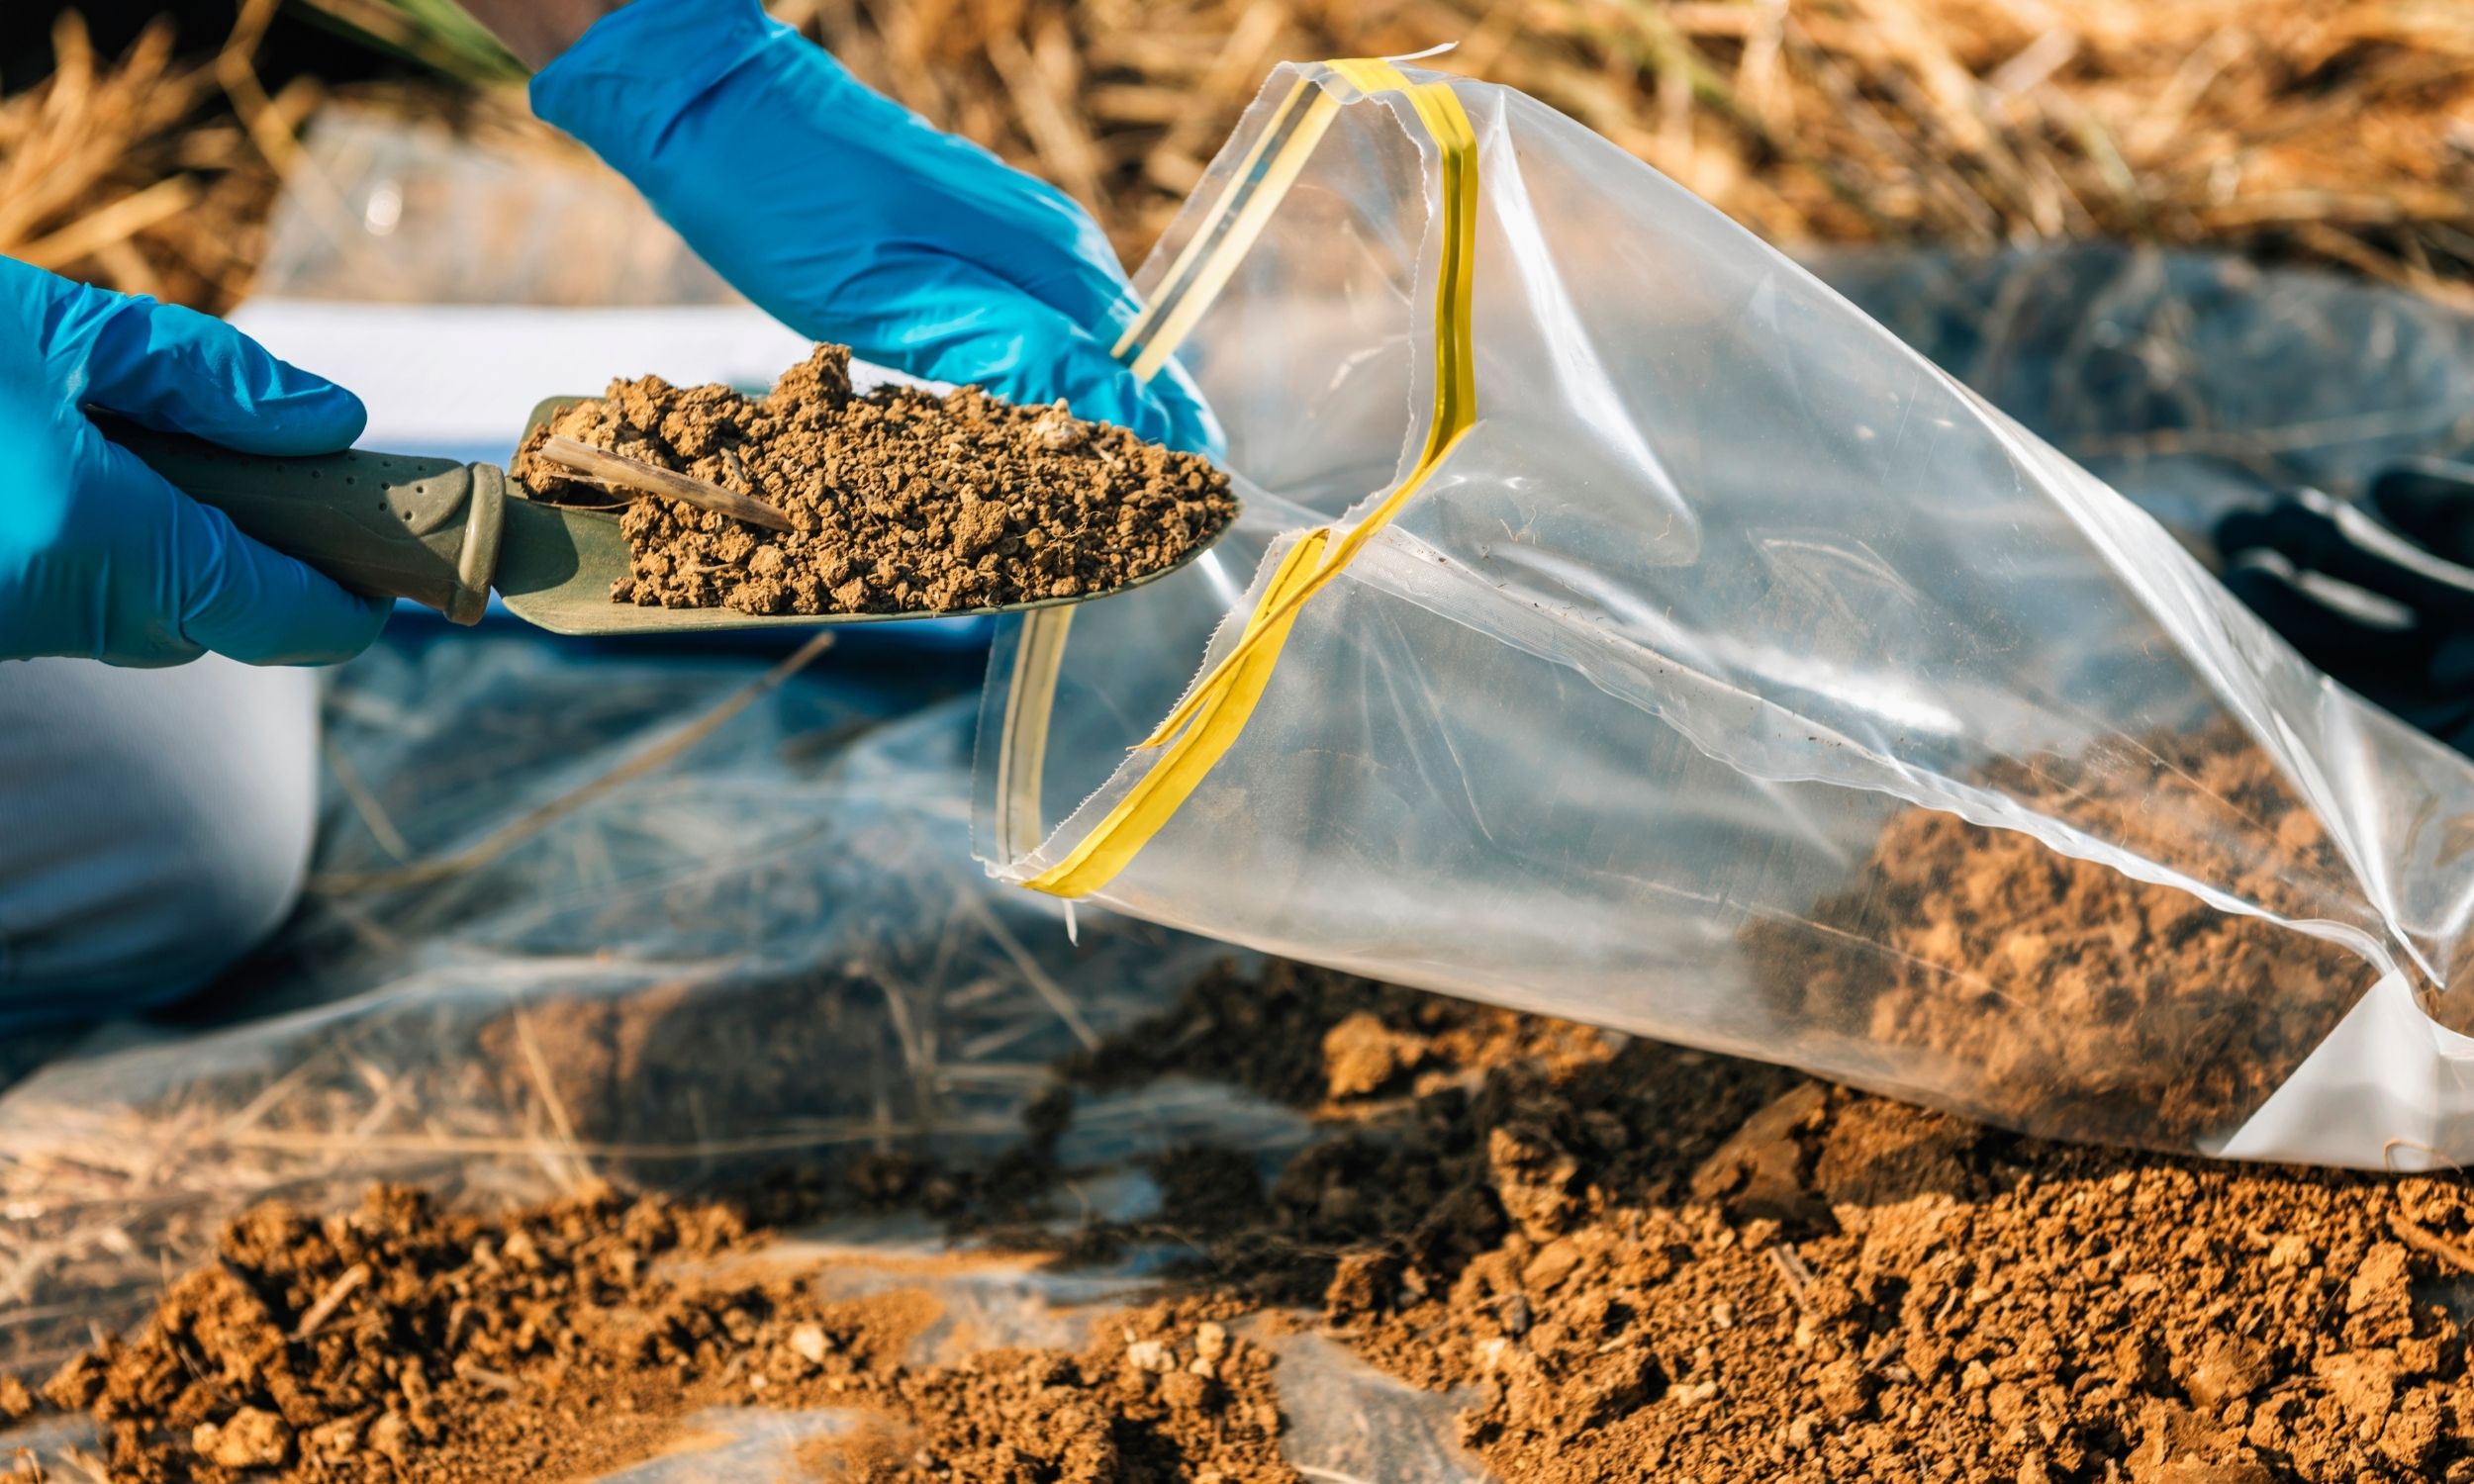 shoveling soil into a bag